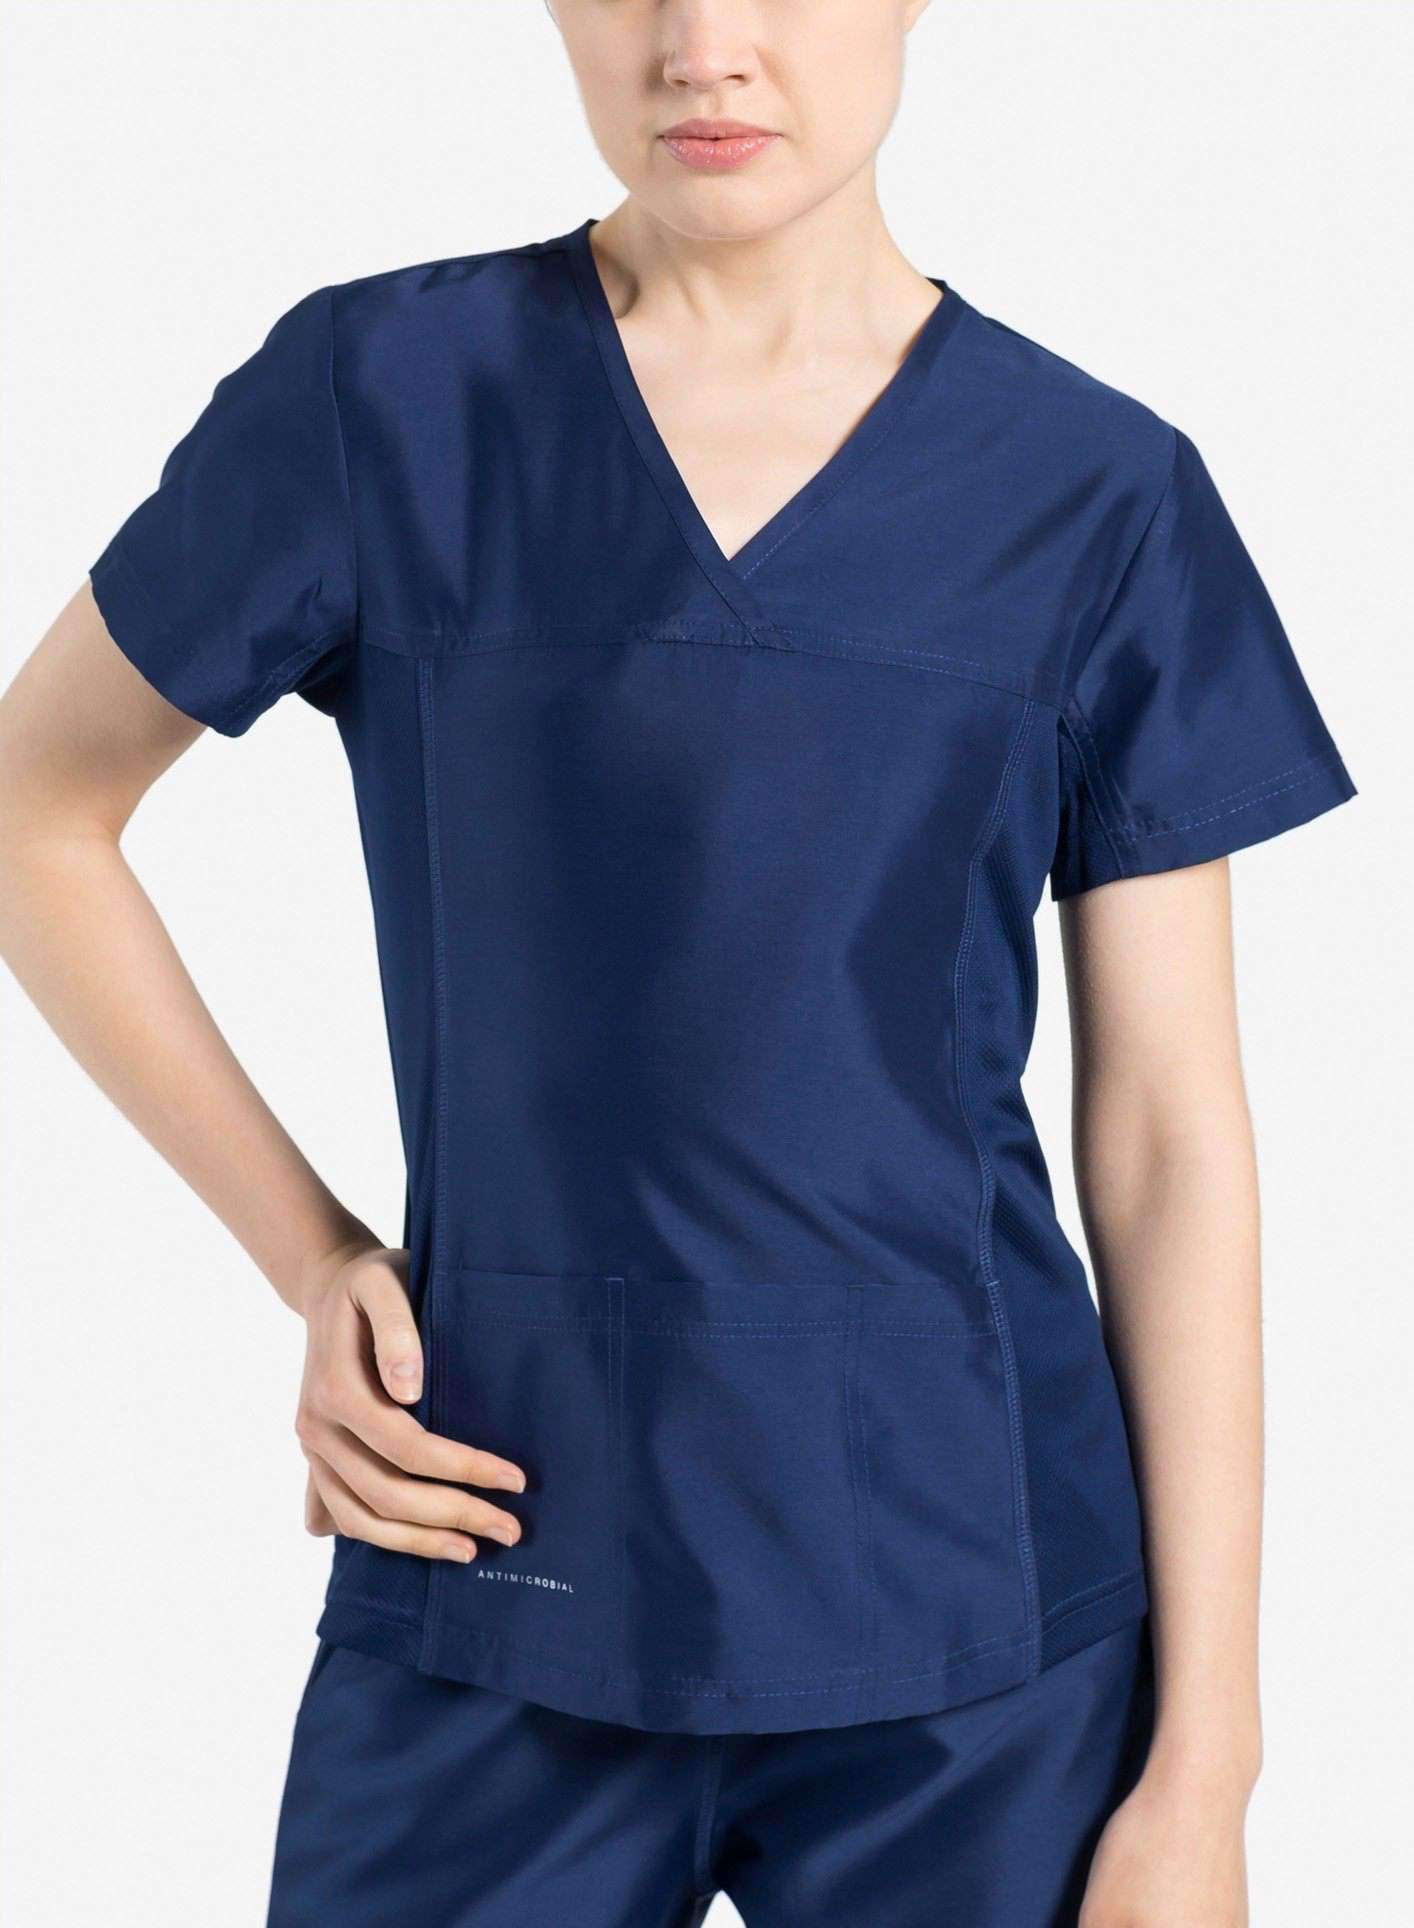 womens Elements short sleeve three pocket scrub top navy-blue